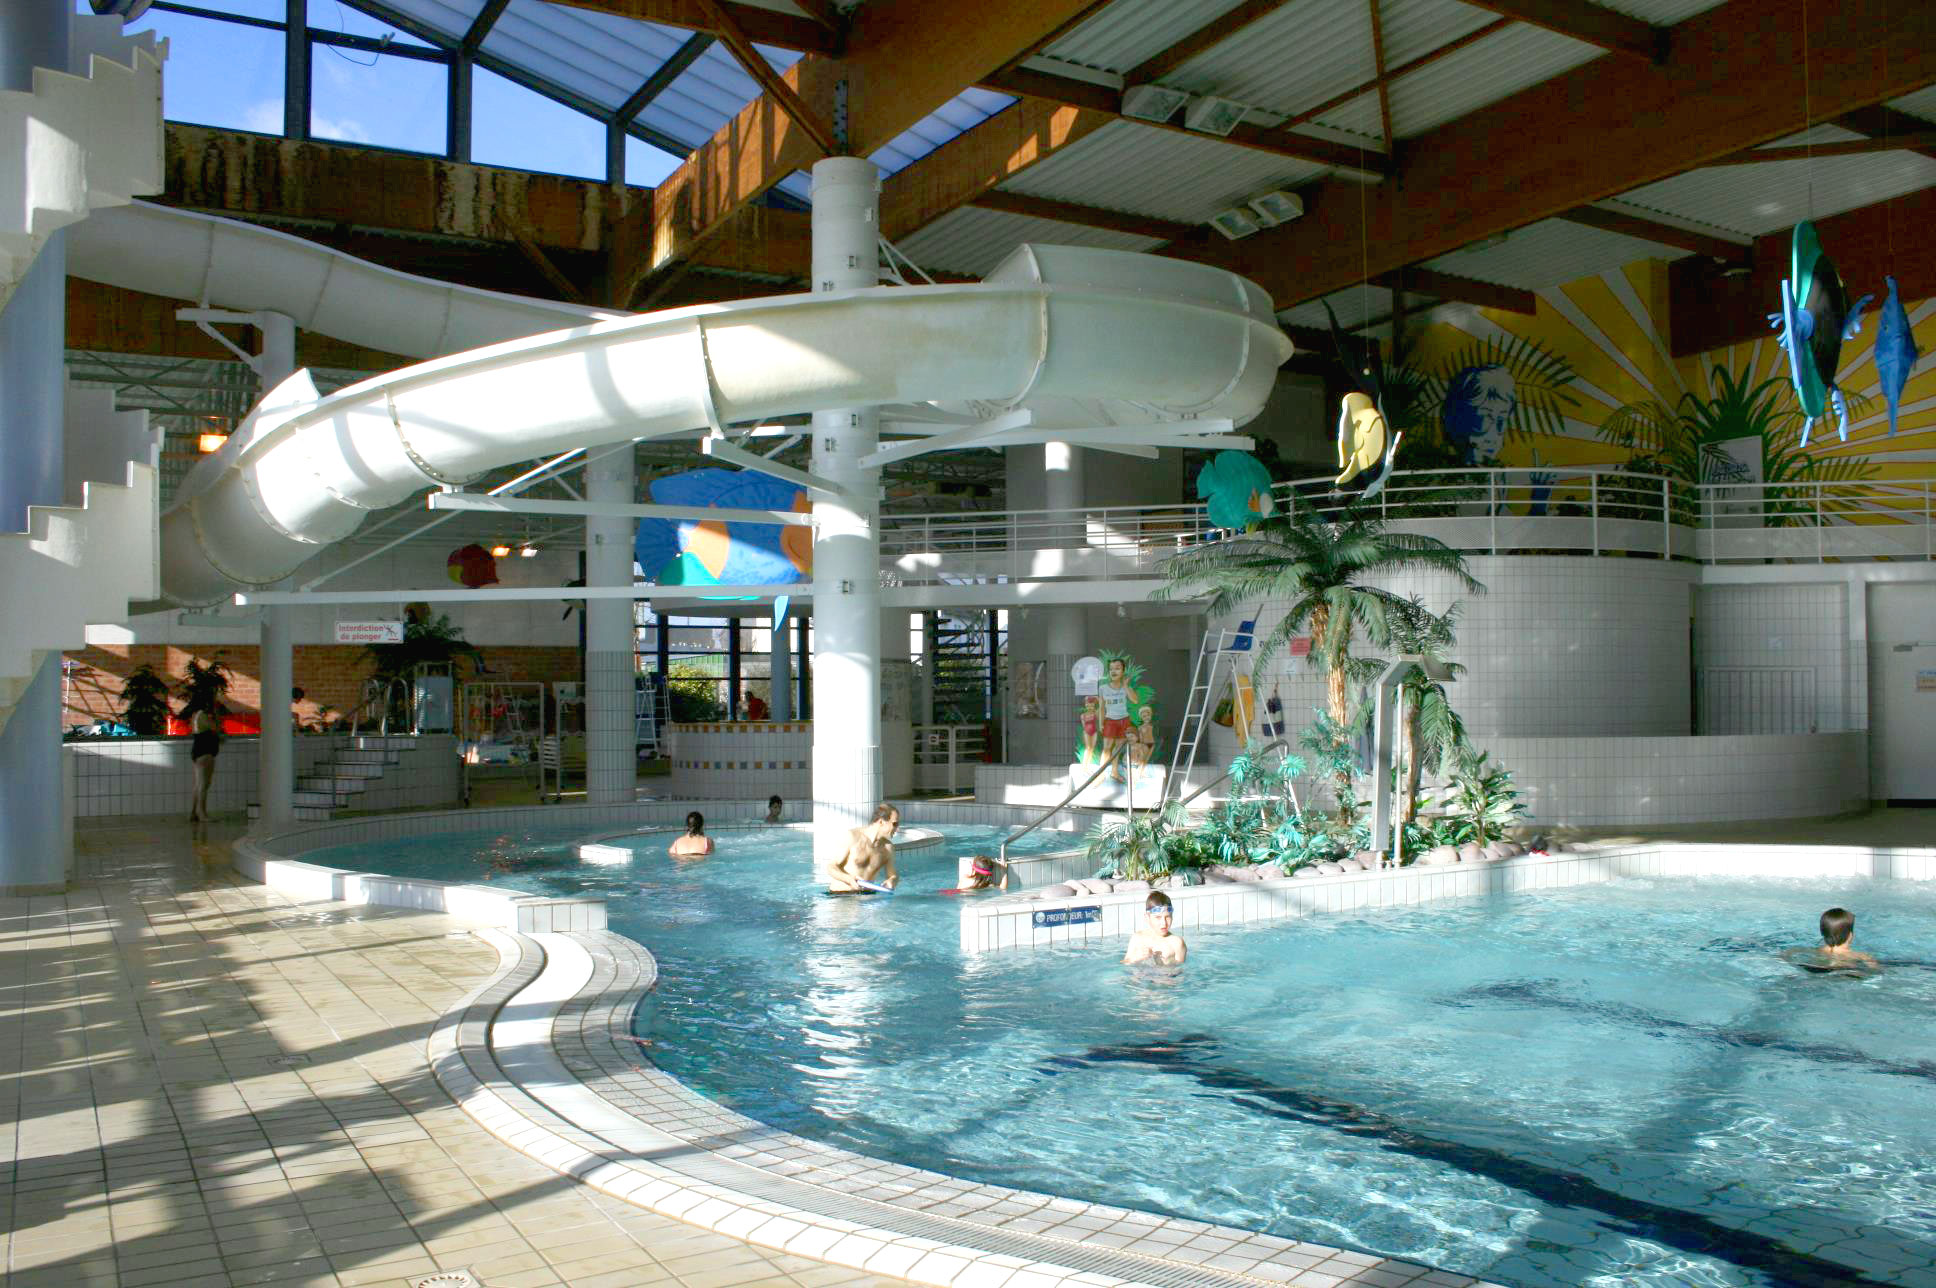 La piscine de Loudéac